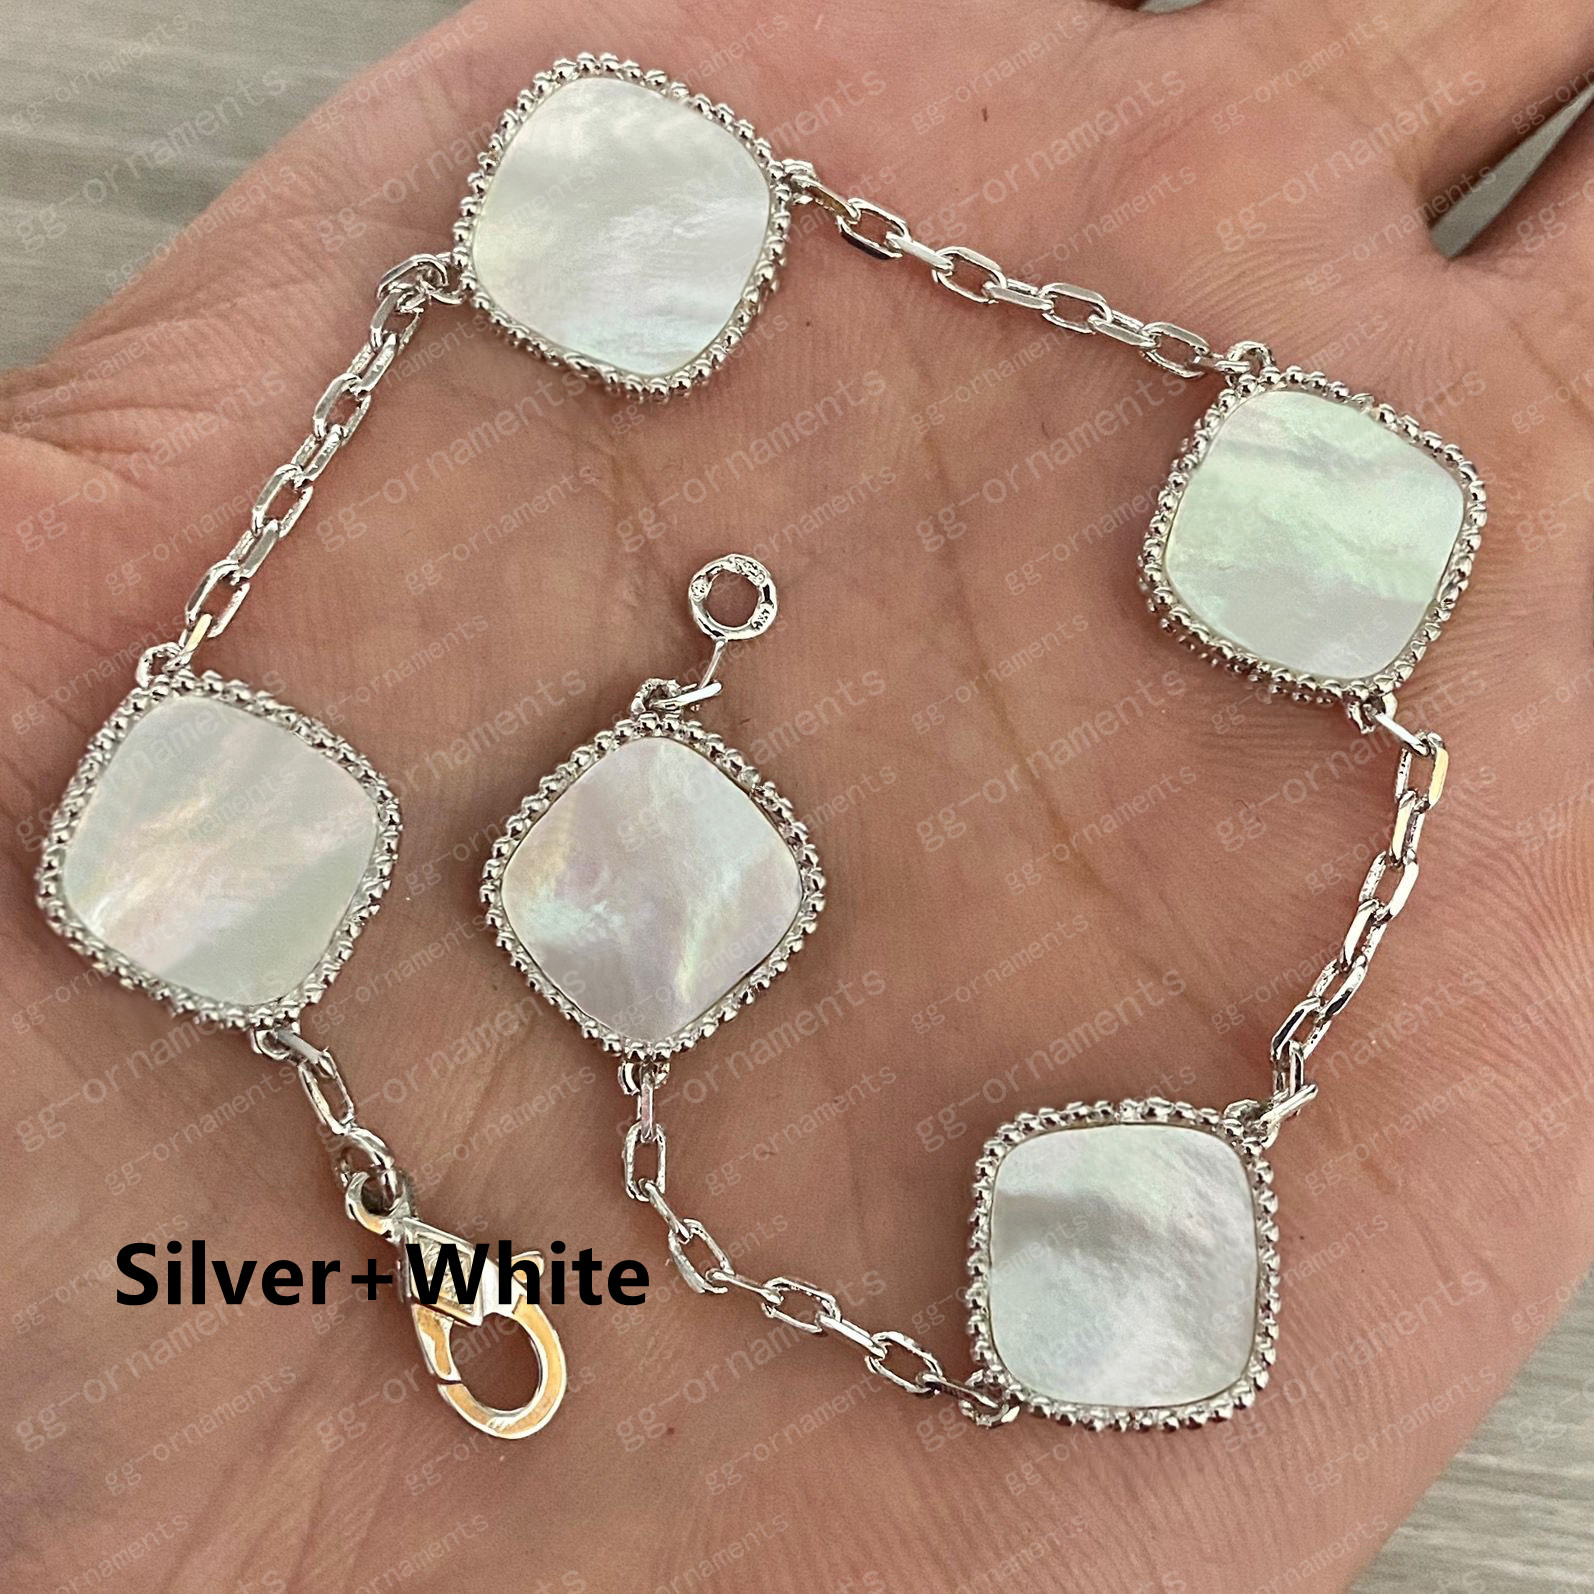 designer bracelet Classic 4 Four Leaf Clover Charm Bracelets Bangle Chain 18K Gold Agate Shell Mother-of-Pearl for Women&Girl Wedd236d